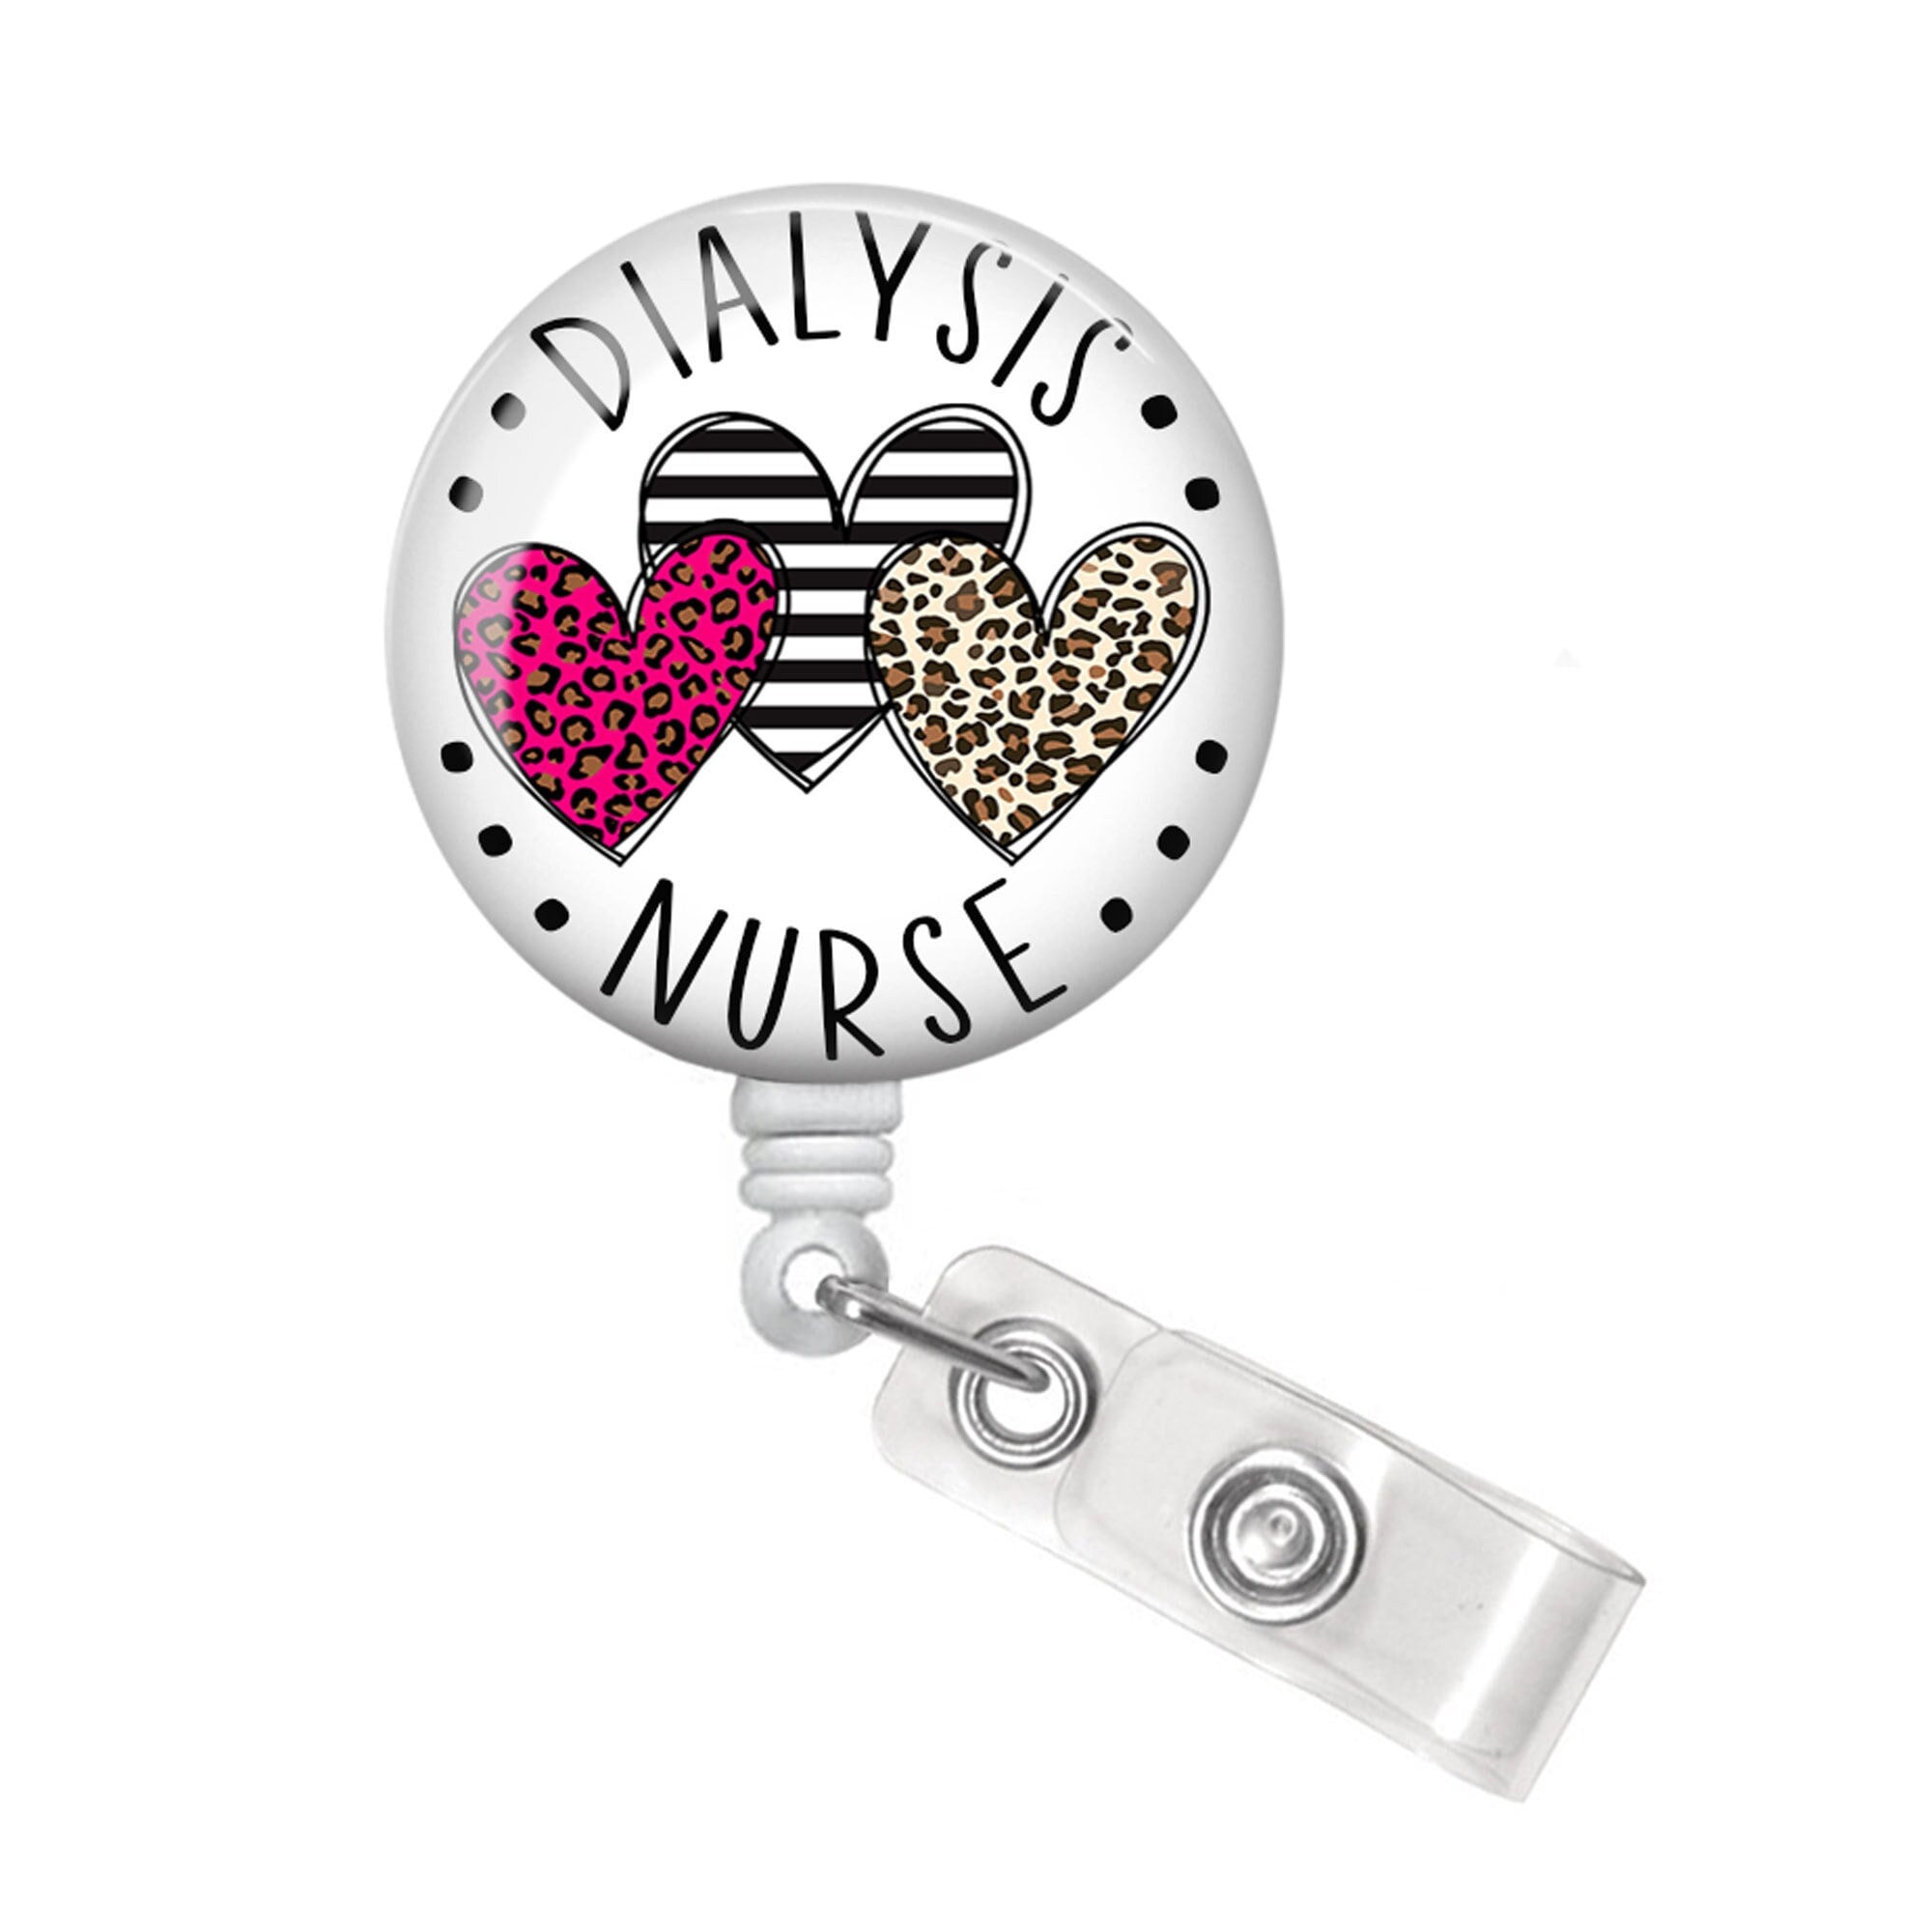 Dialysis Nurse - Retractable Badge Holder - Badge Reel - Lanyards